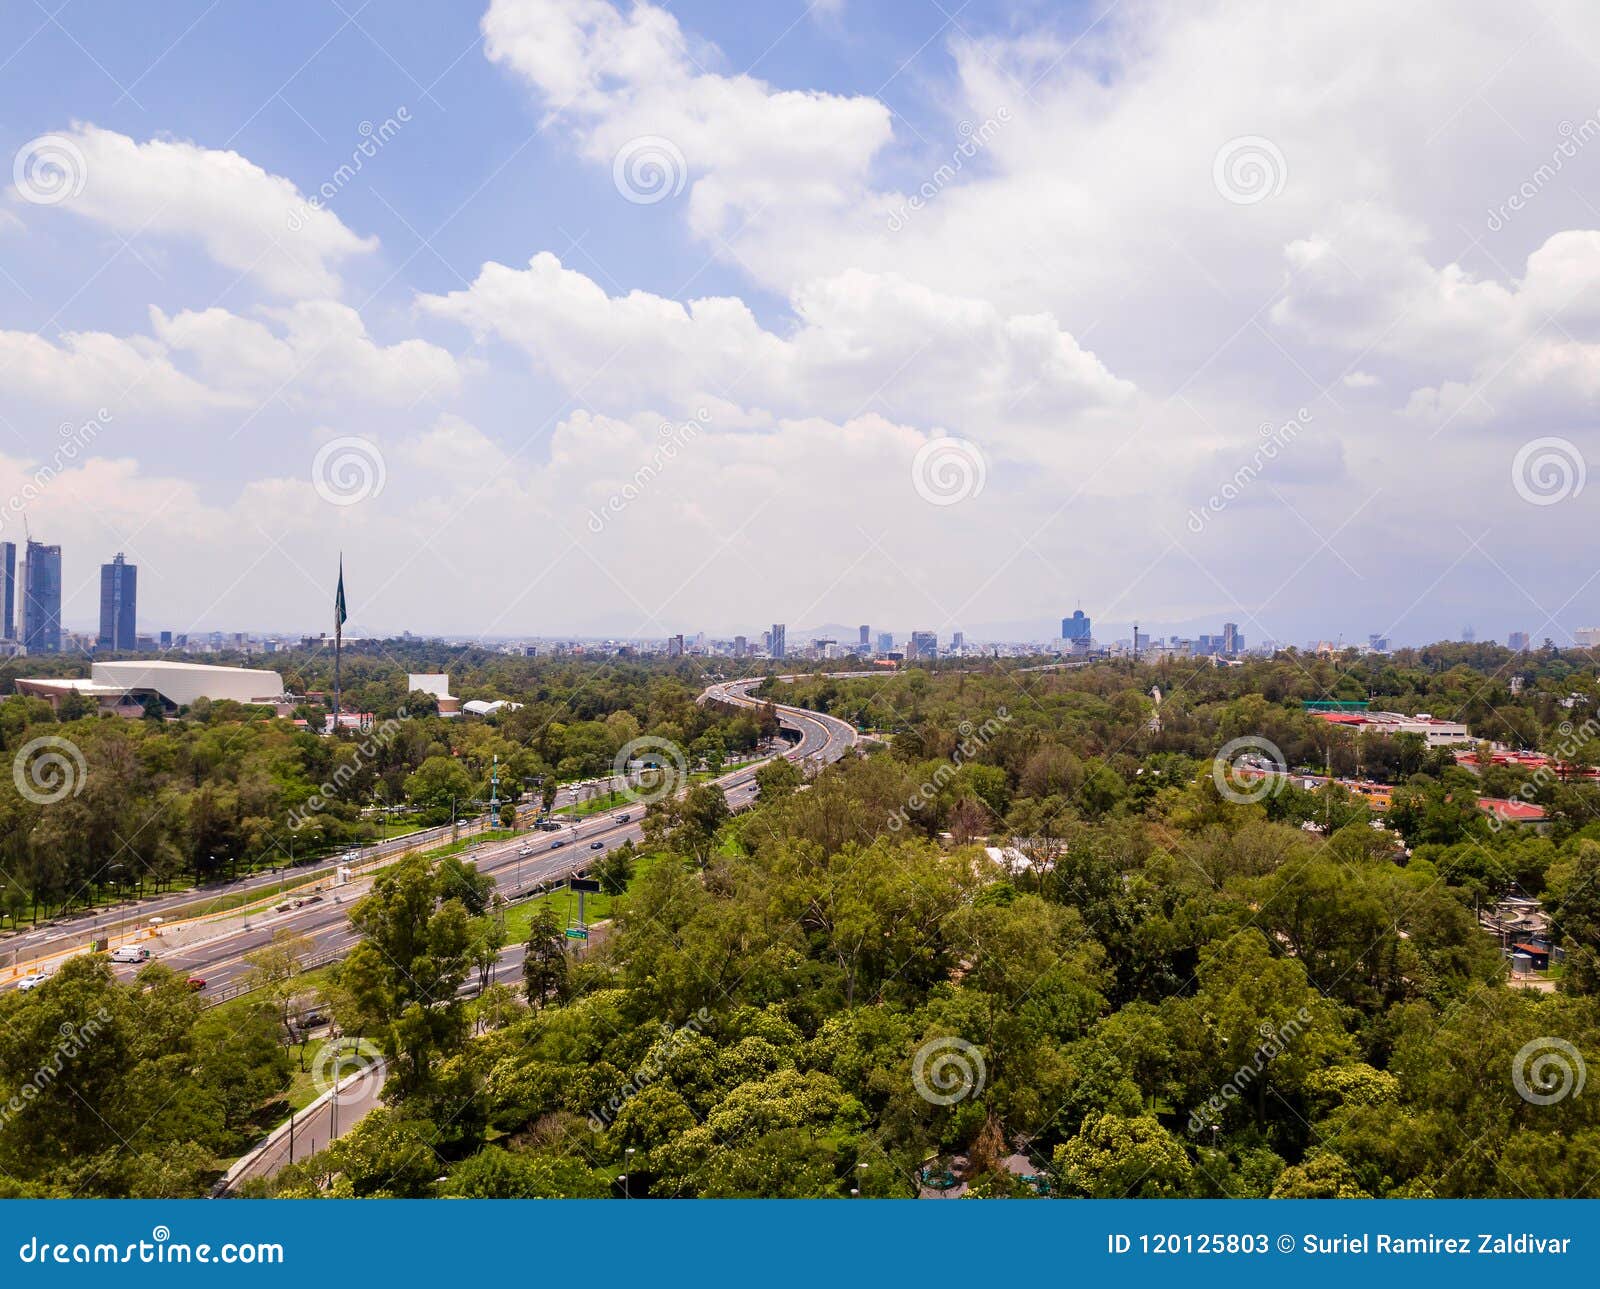 mexico city panoramic view chapultepec park and periferico